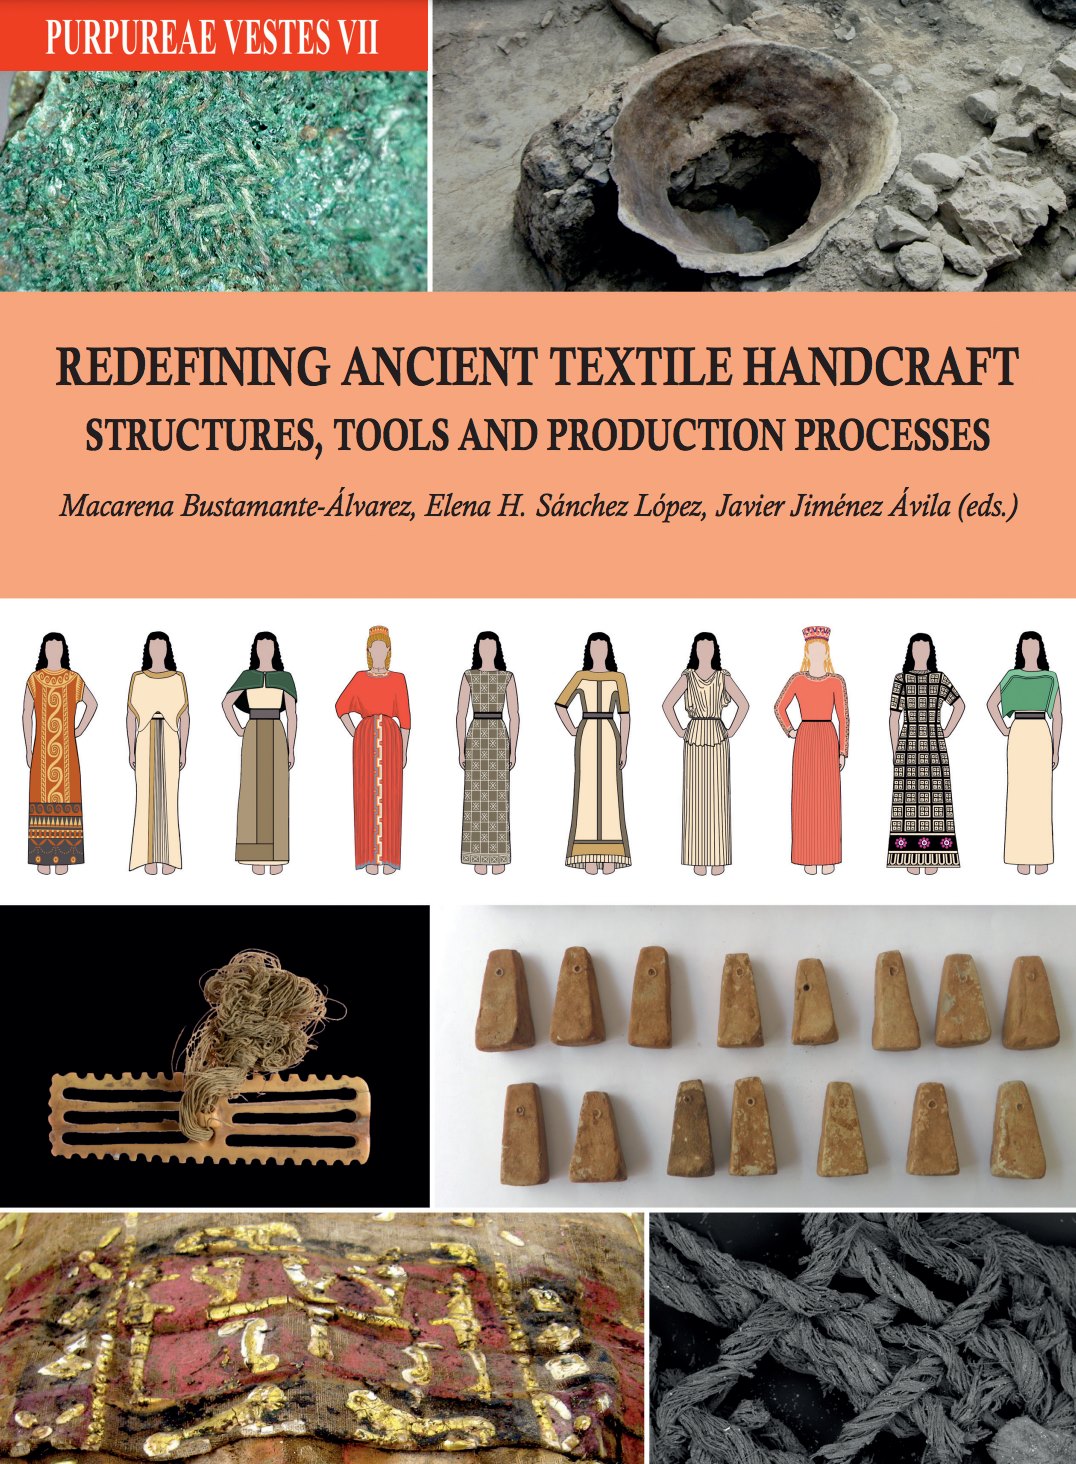 Purpureae vestes VII. Redefining Ancient Textile Handcraft. Structures, Tools and Production Processes, 2021, 568 p.